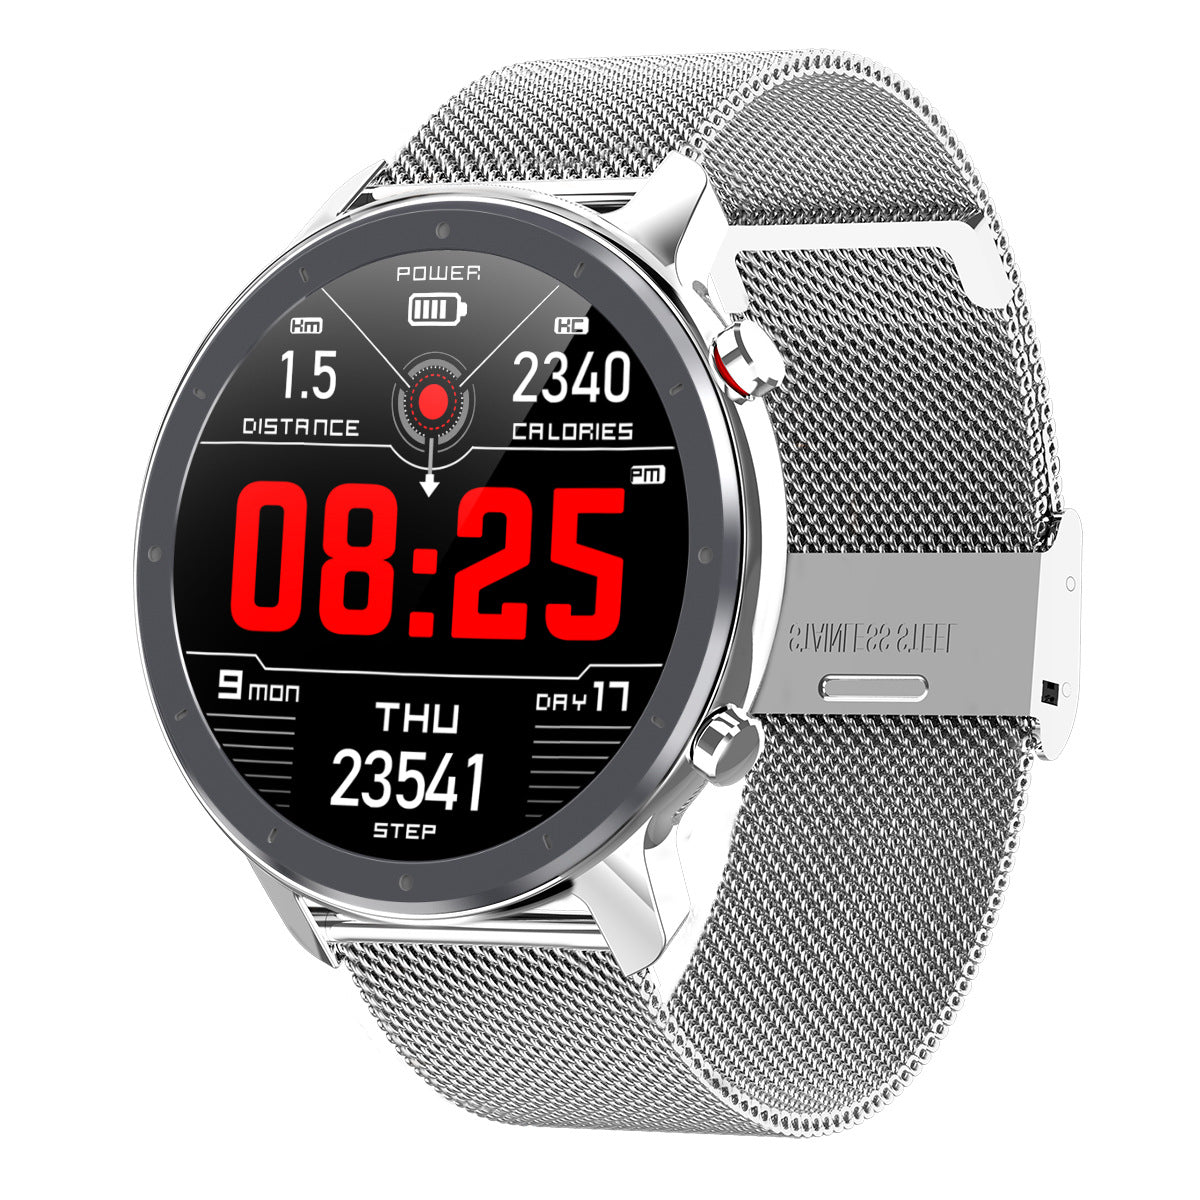 Health & sports smart watch